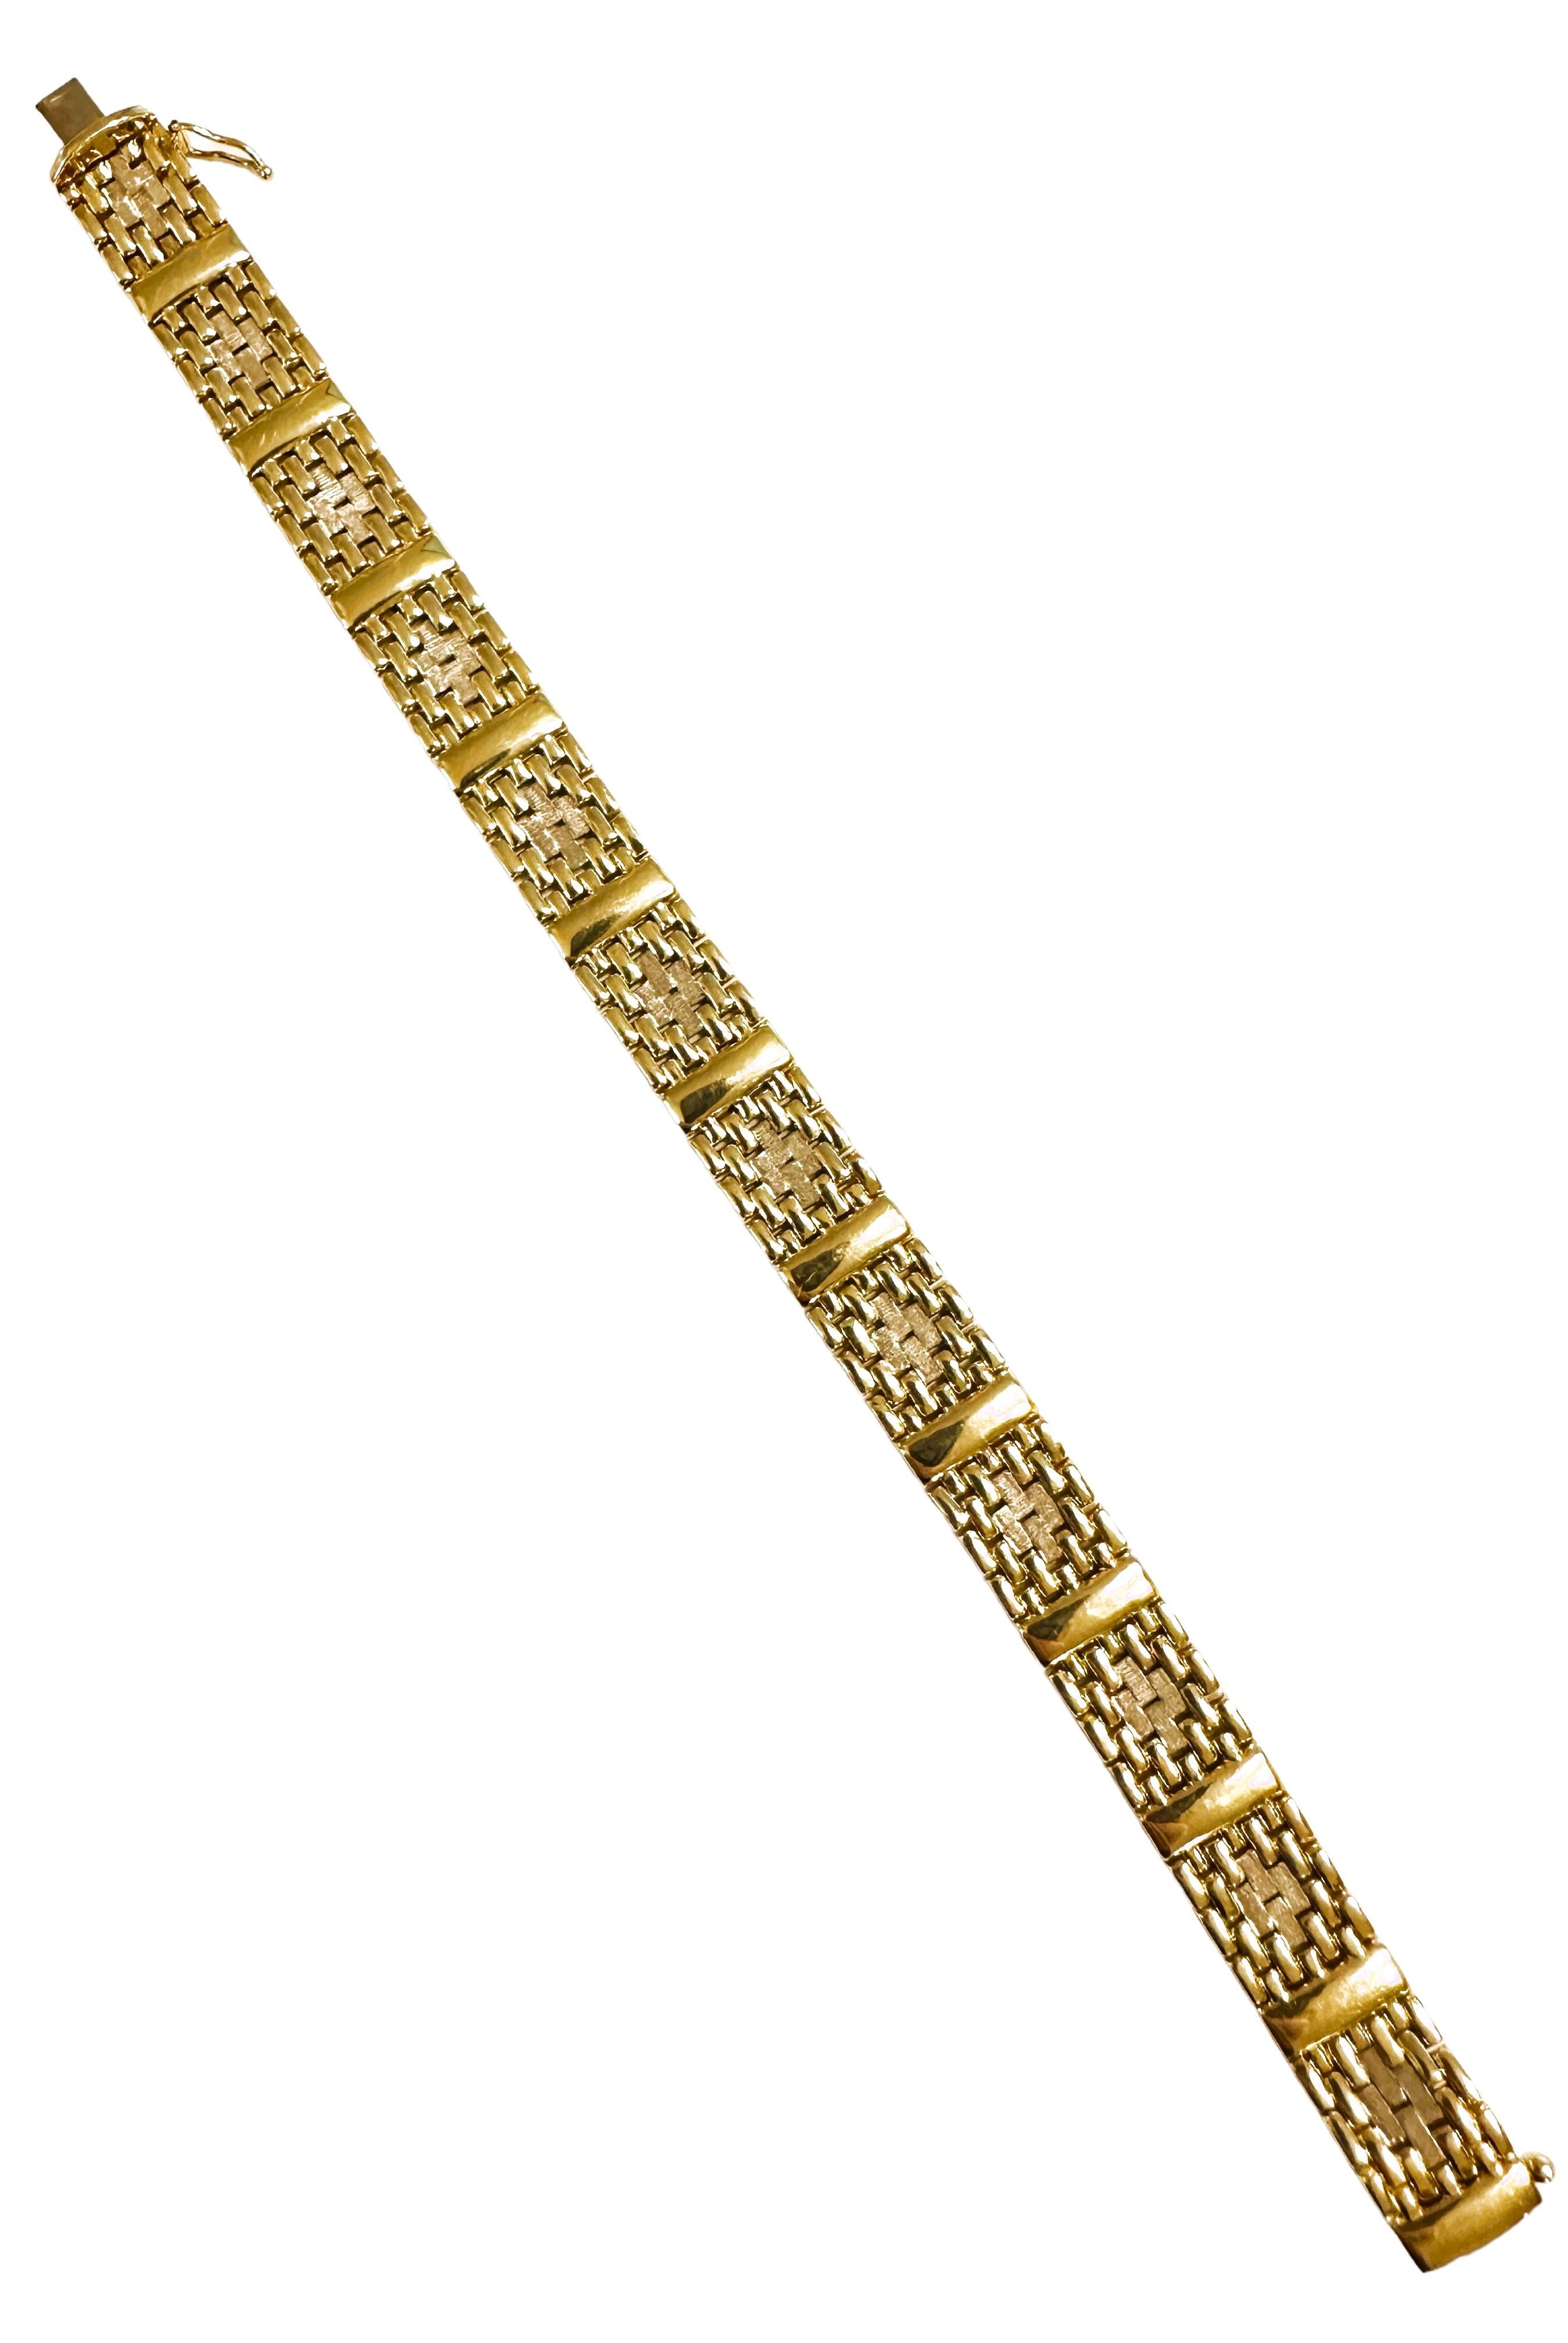 14k YGold Modern Italian Hinged Link Bracelet with Cross Design 21.48 Grams For Sale 9